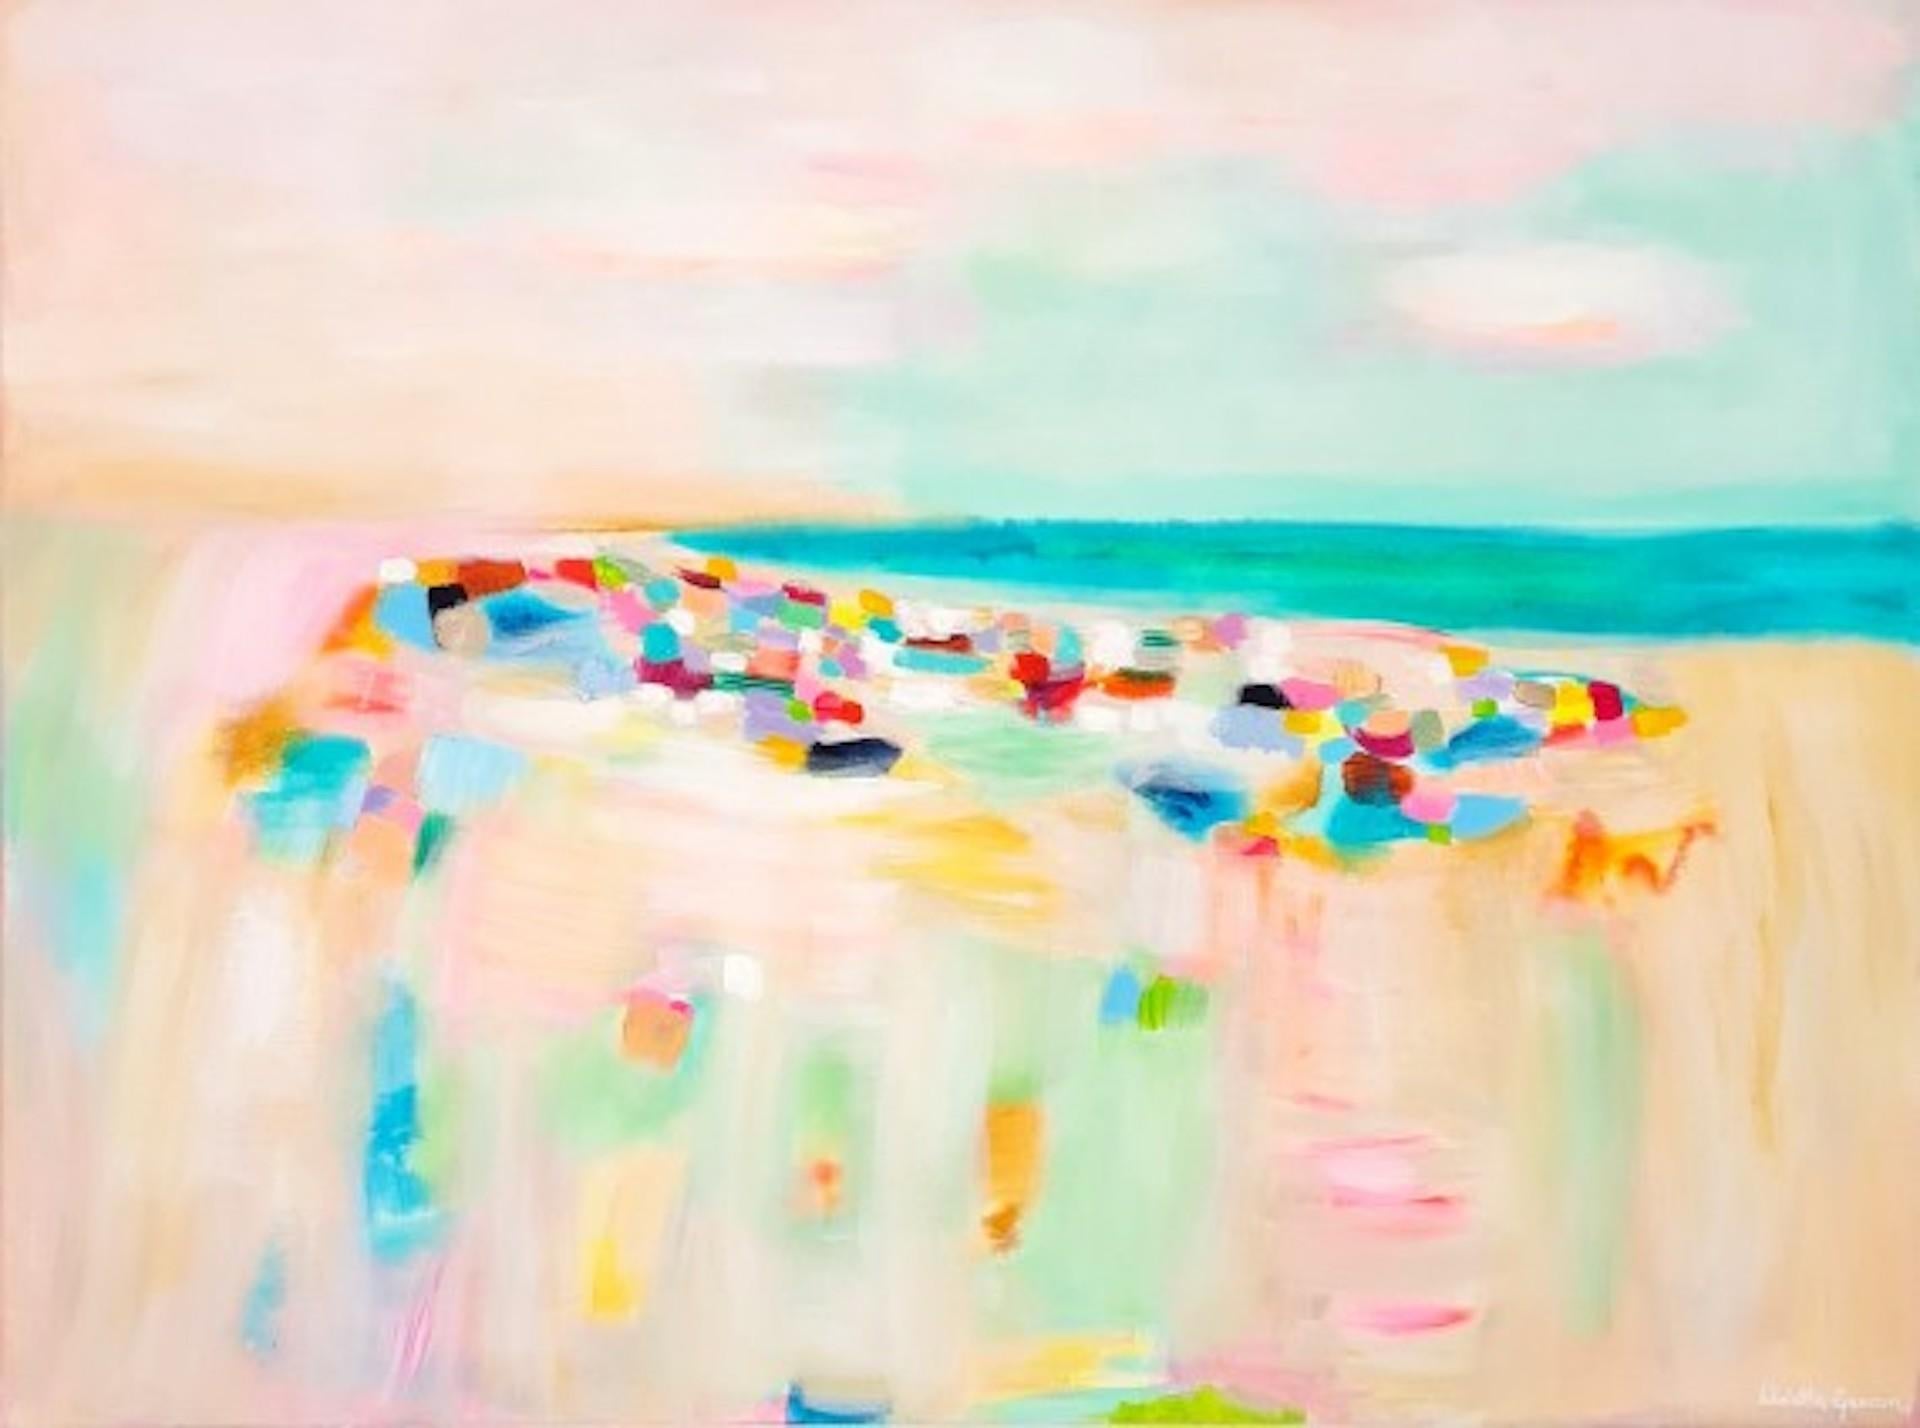 Laguna Beach 2, Wioletta Gancarz, Original Colourful Abstract Painting